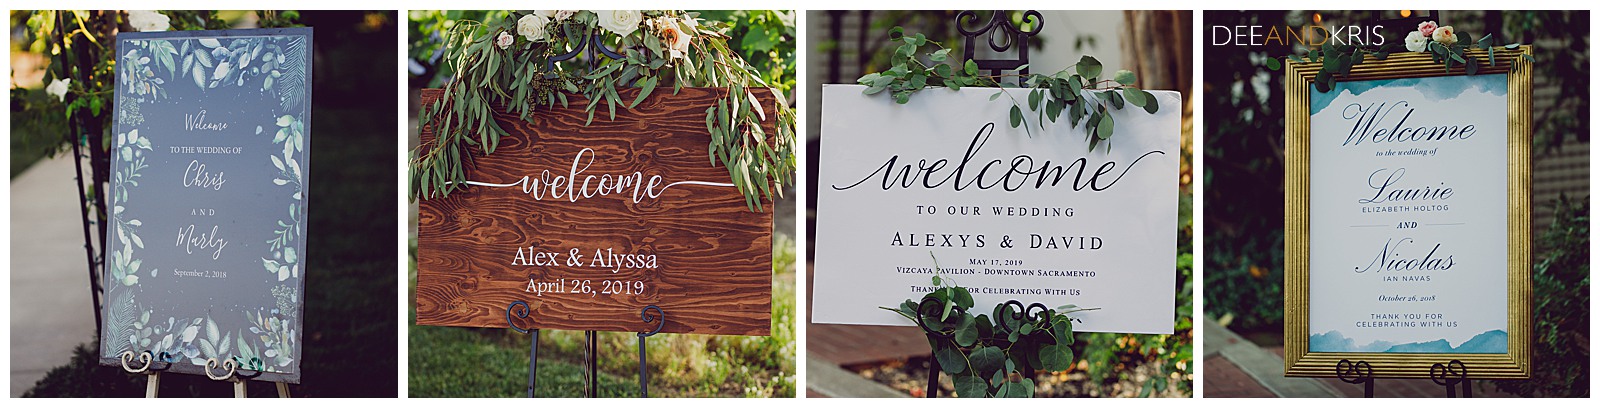 Wedding welcome signs, classic signs, local Sacramento printer